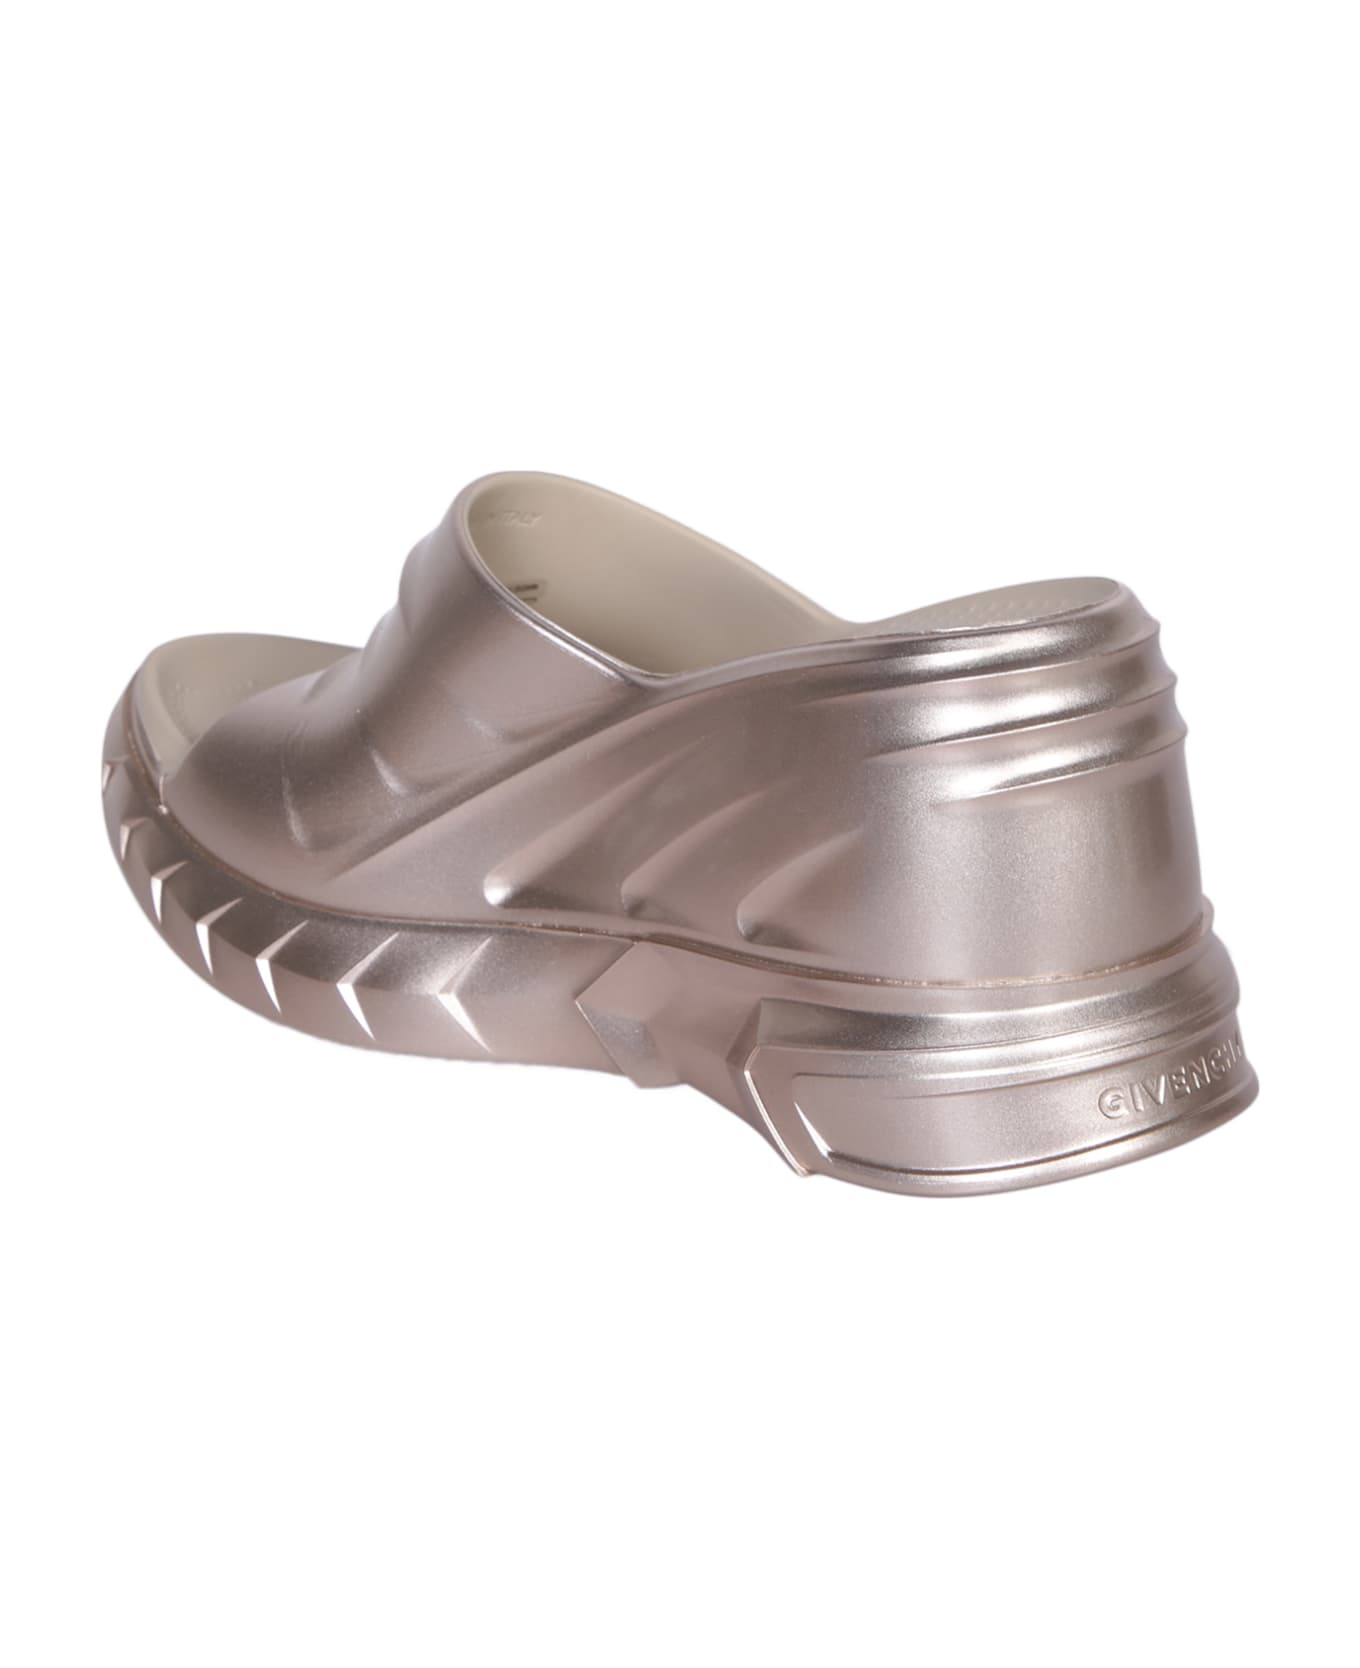 Givenchy Marshmallow Wedge Sandals - Metallic